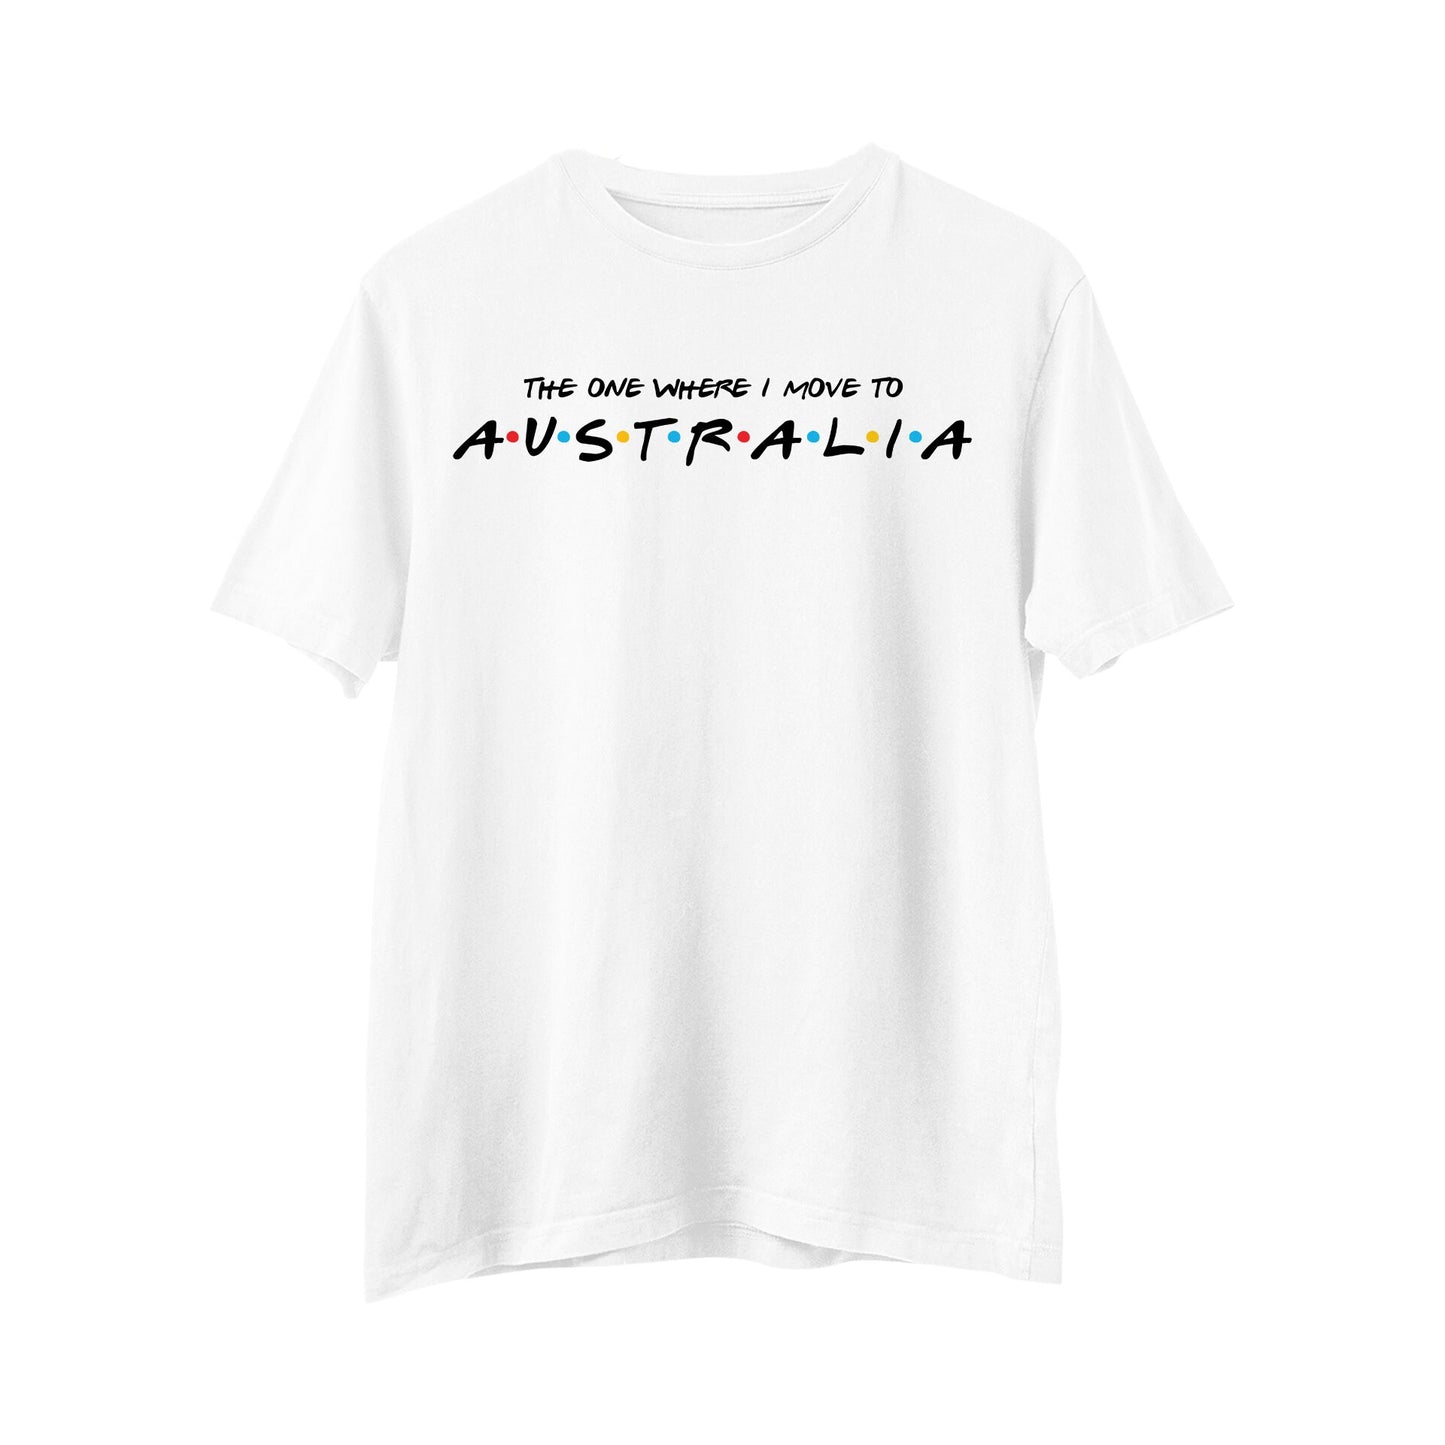 The One Where I move To Australia T-Shirt, Friends Shirt, Friends Tv Show, Friends Theme, Vacation Shirt, Women's, Men's, Funny T-Shirt Gift